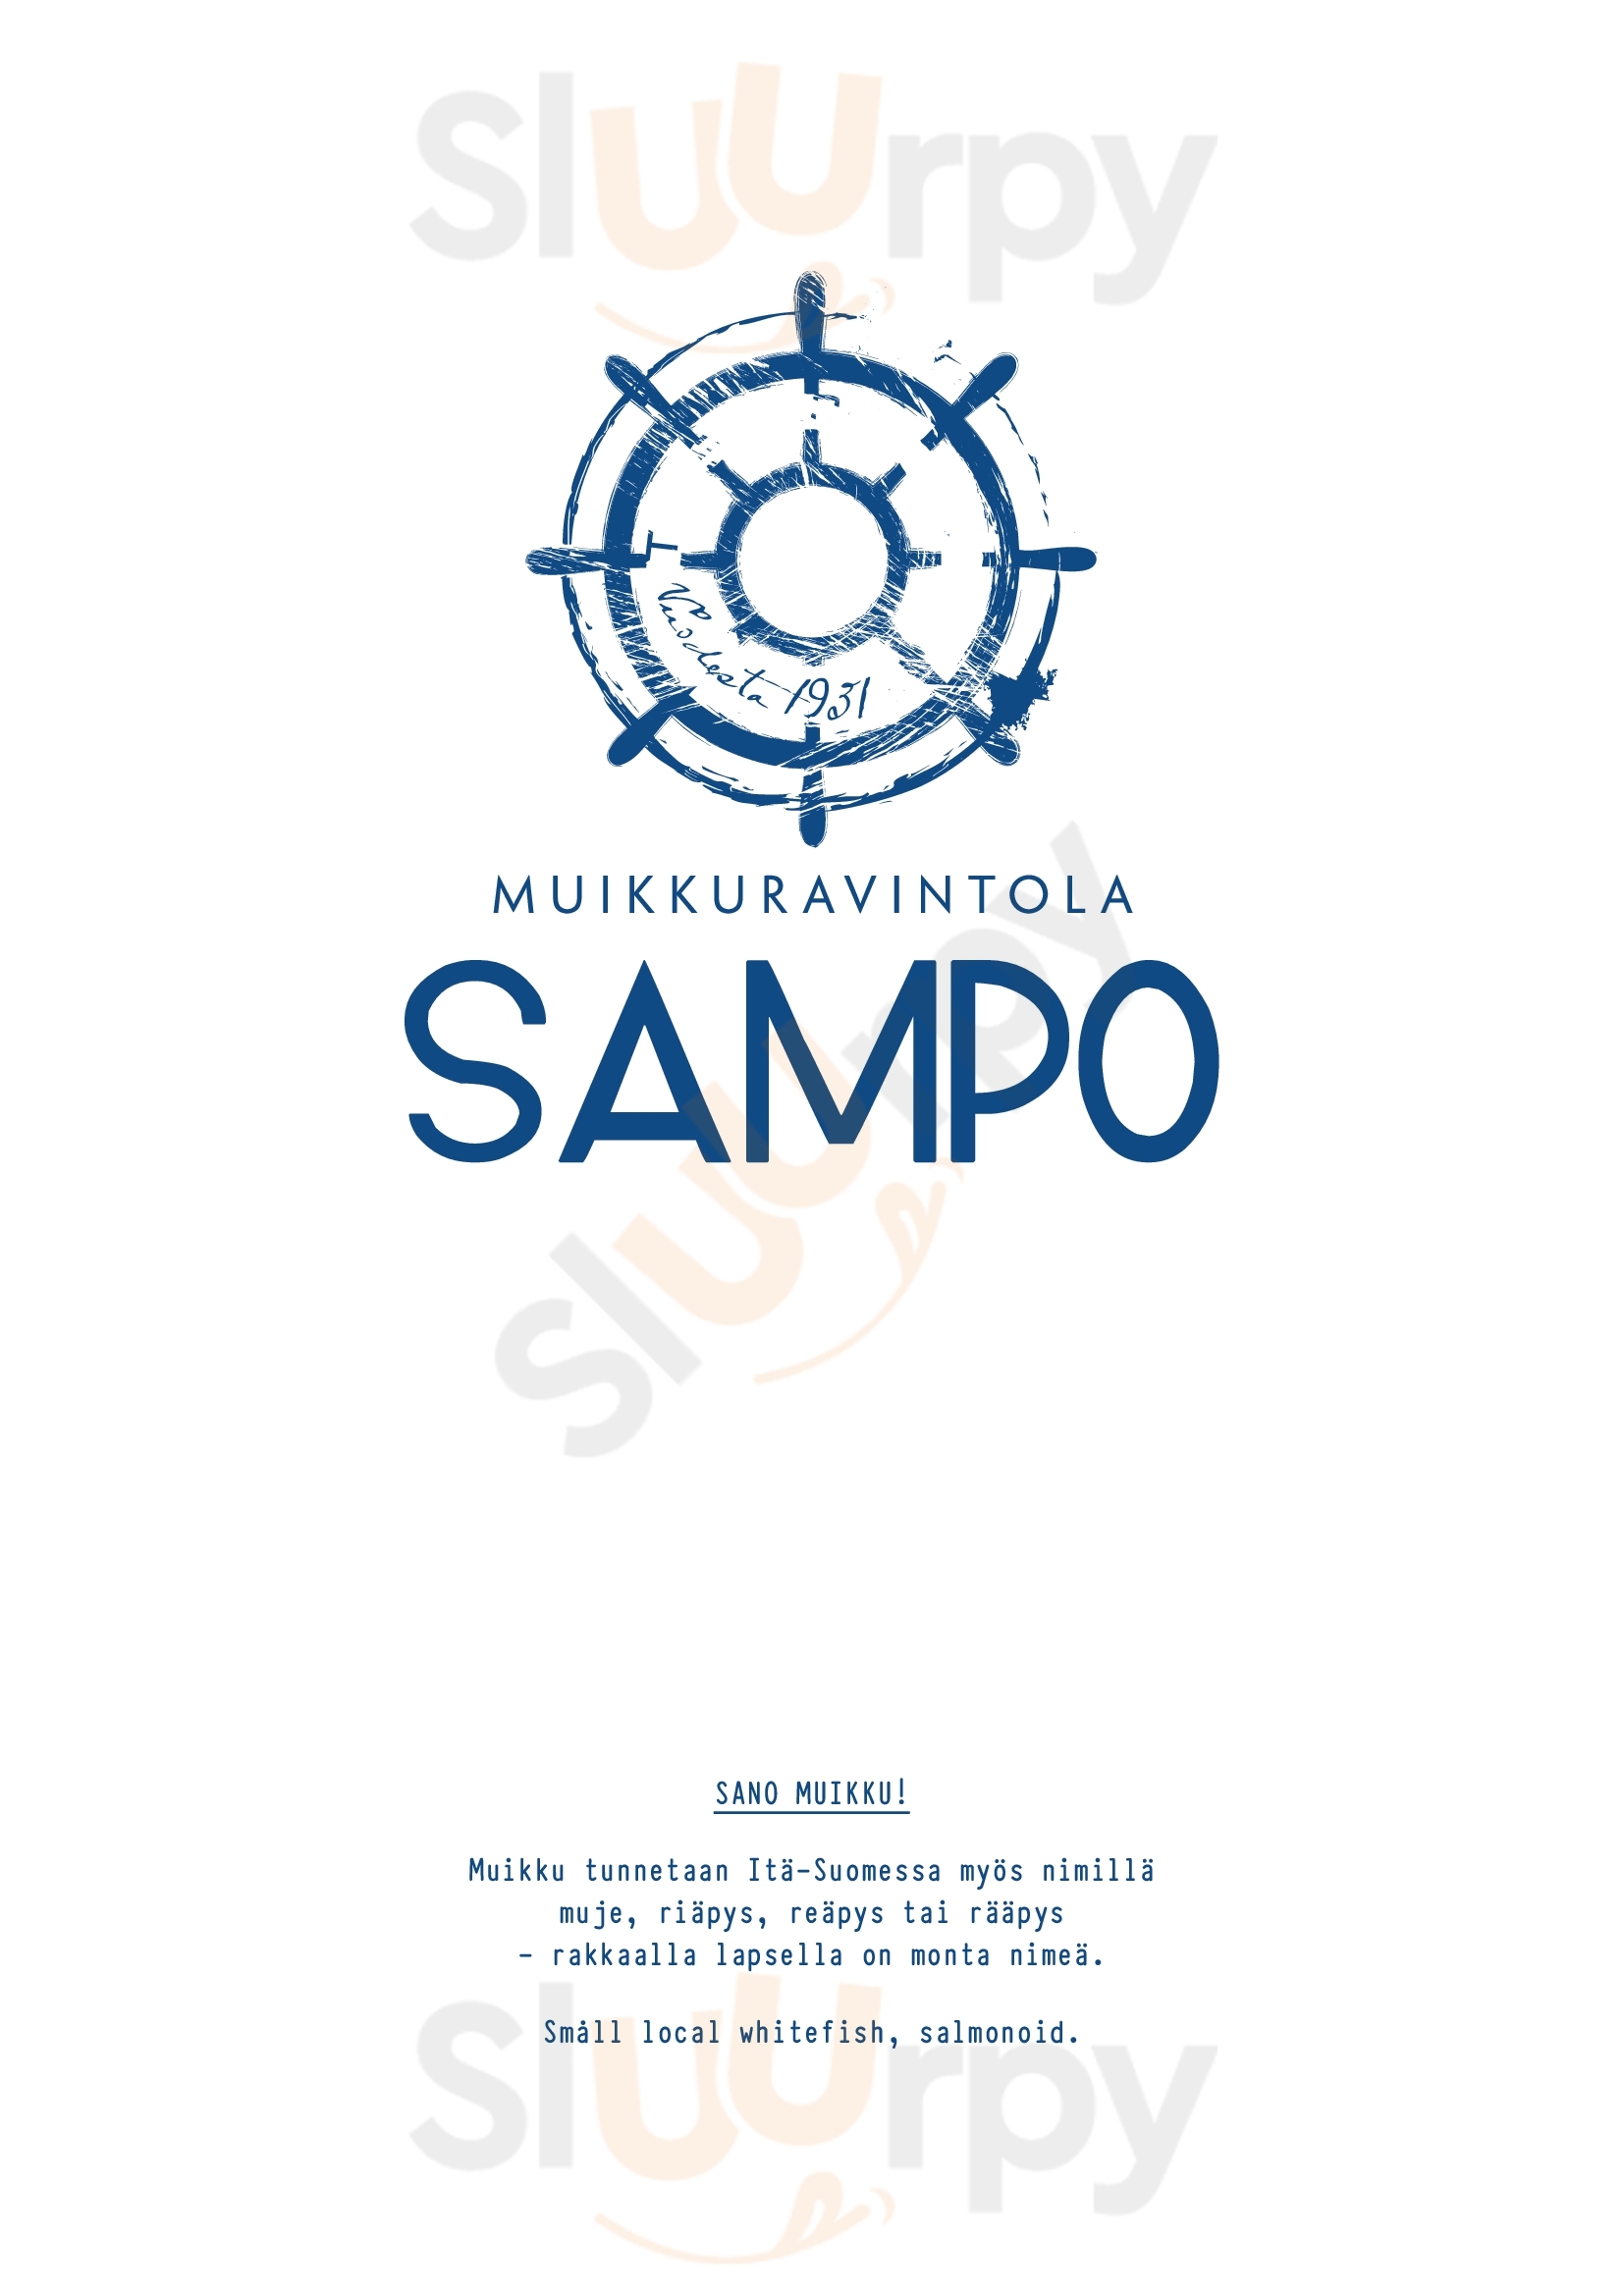 Muikkuravintola Sampo Kuopio Menu - 1